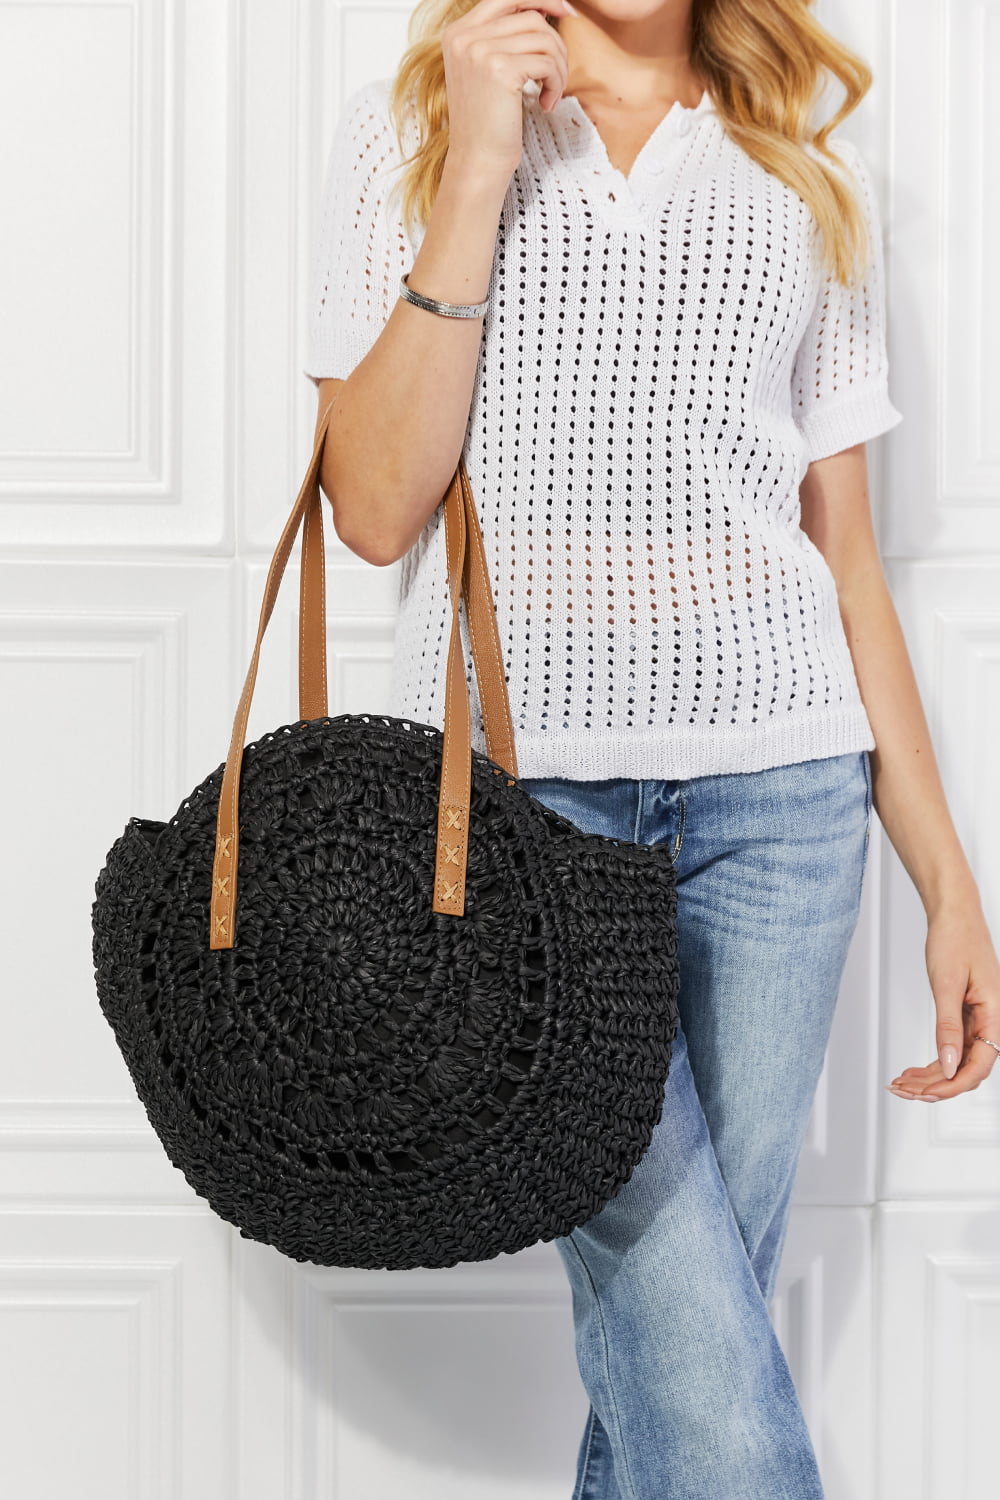 Justin Taylor C&#39;est La Vie Crochet Handbag in Black - Online Only